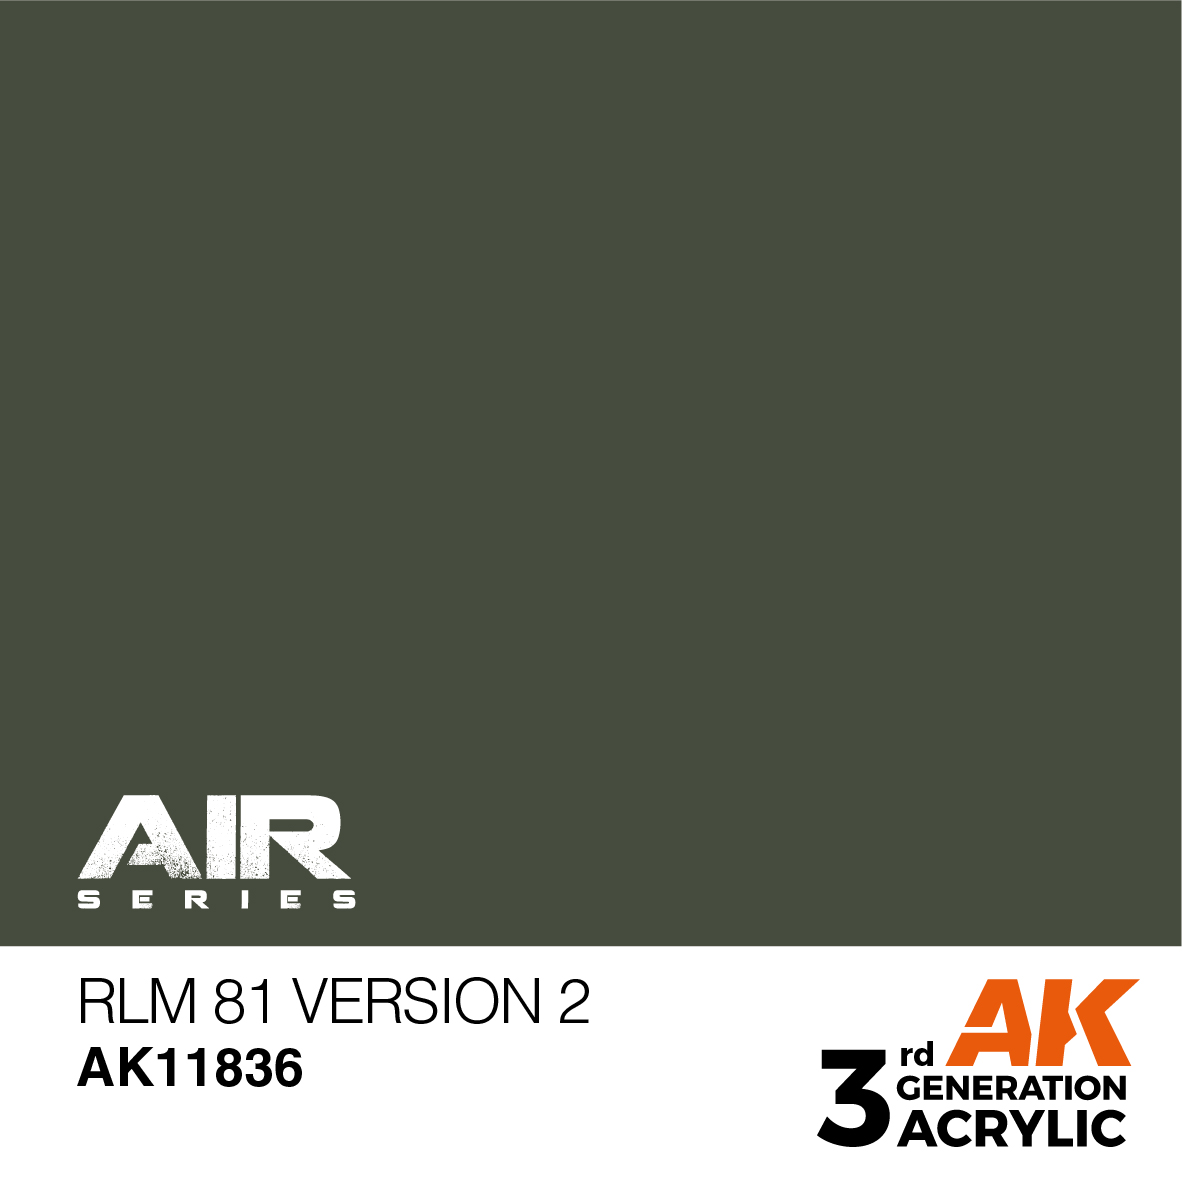 RLM 81 Version 2 – AIR